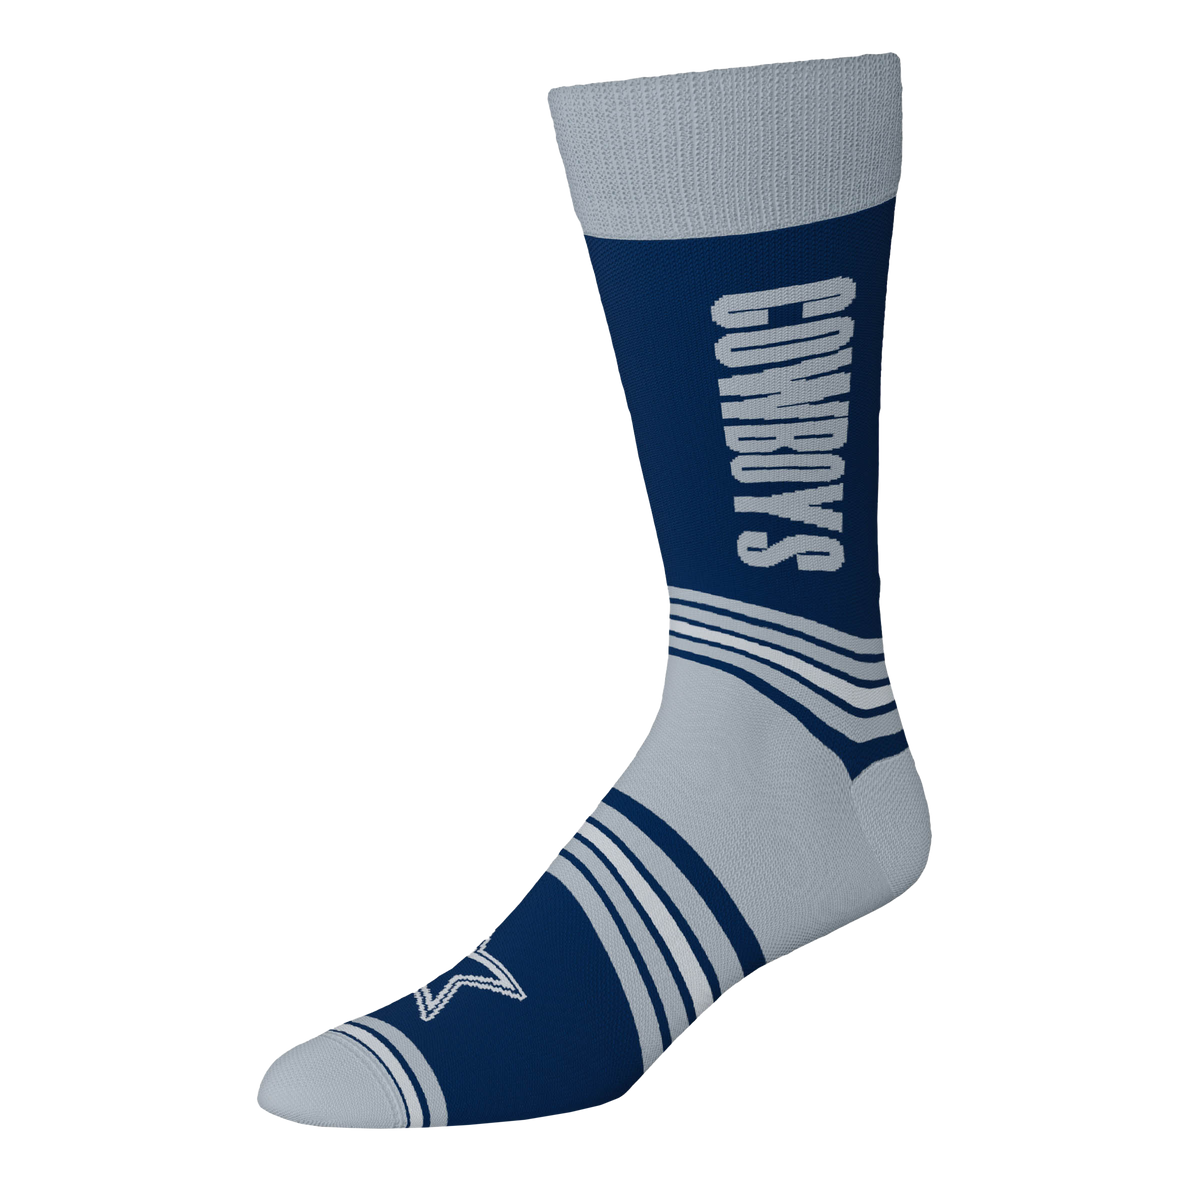 Dallas Cowboys - Go Team! Socks